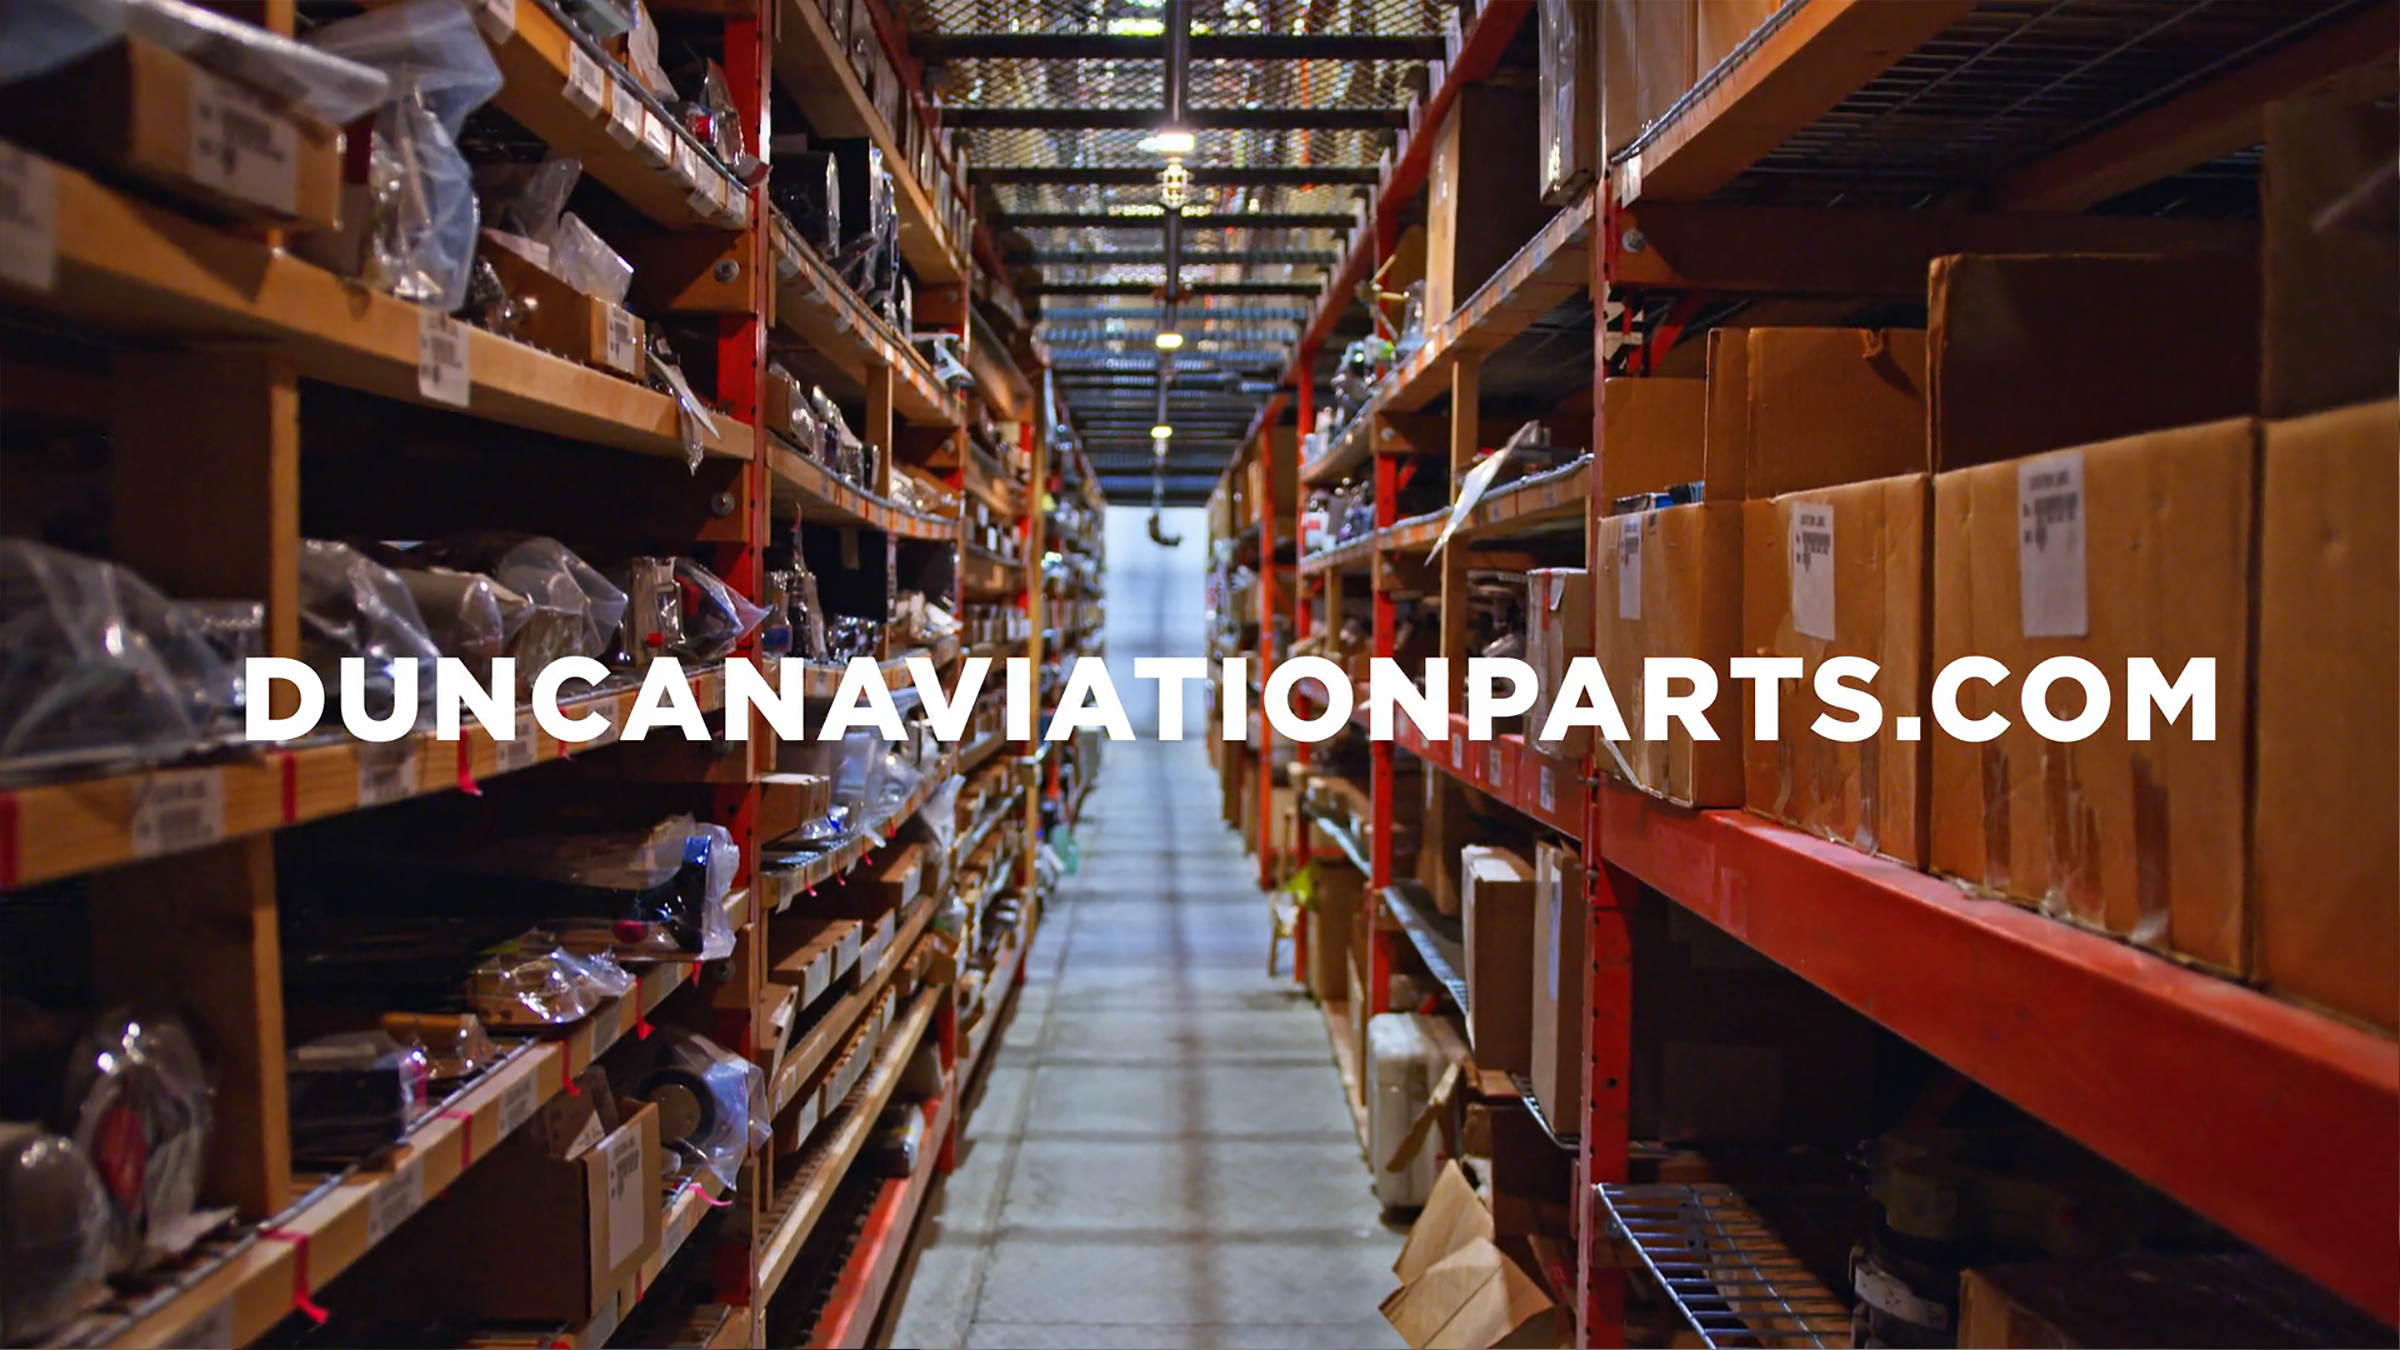 DuncanAviationParts.com-warehouse of aviation parts